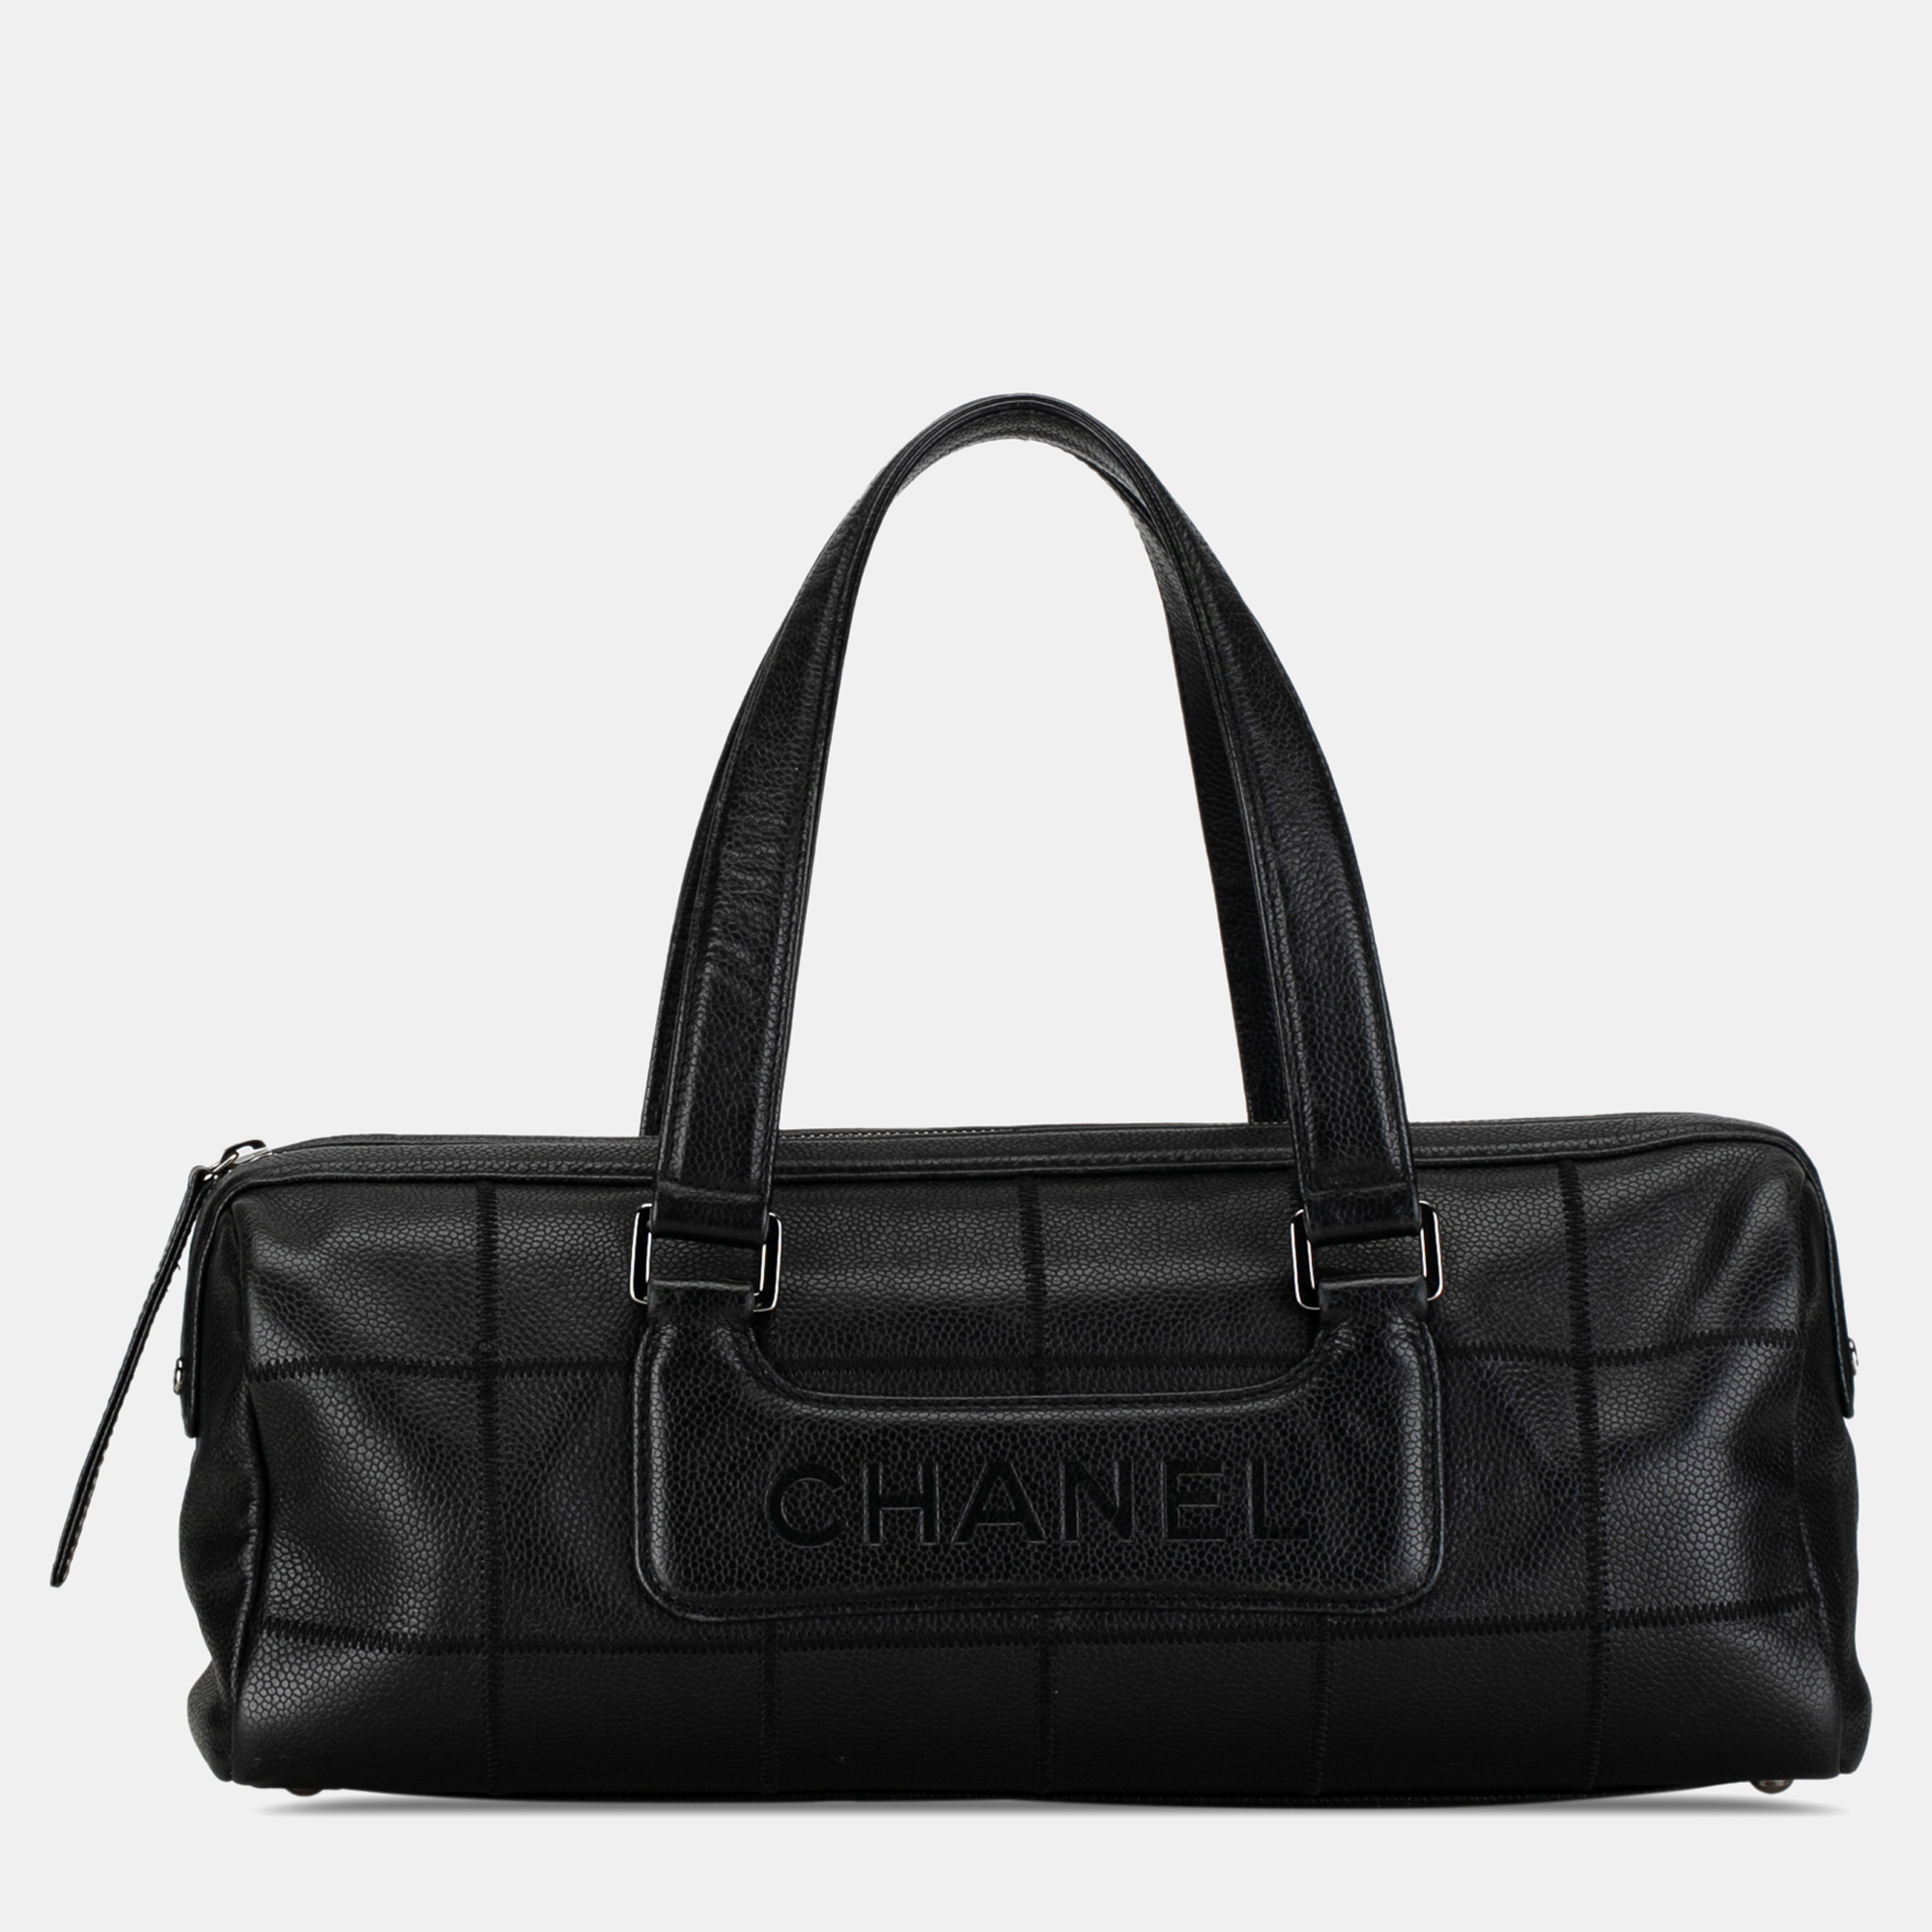 Chanel caviar choco bar handbag